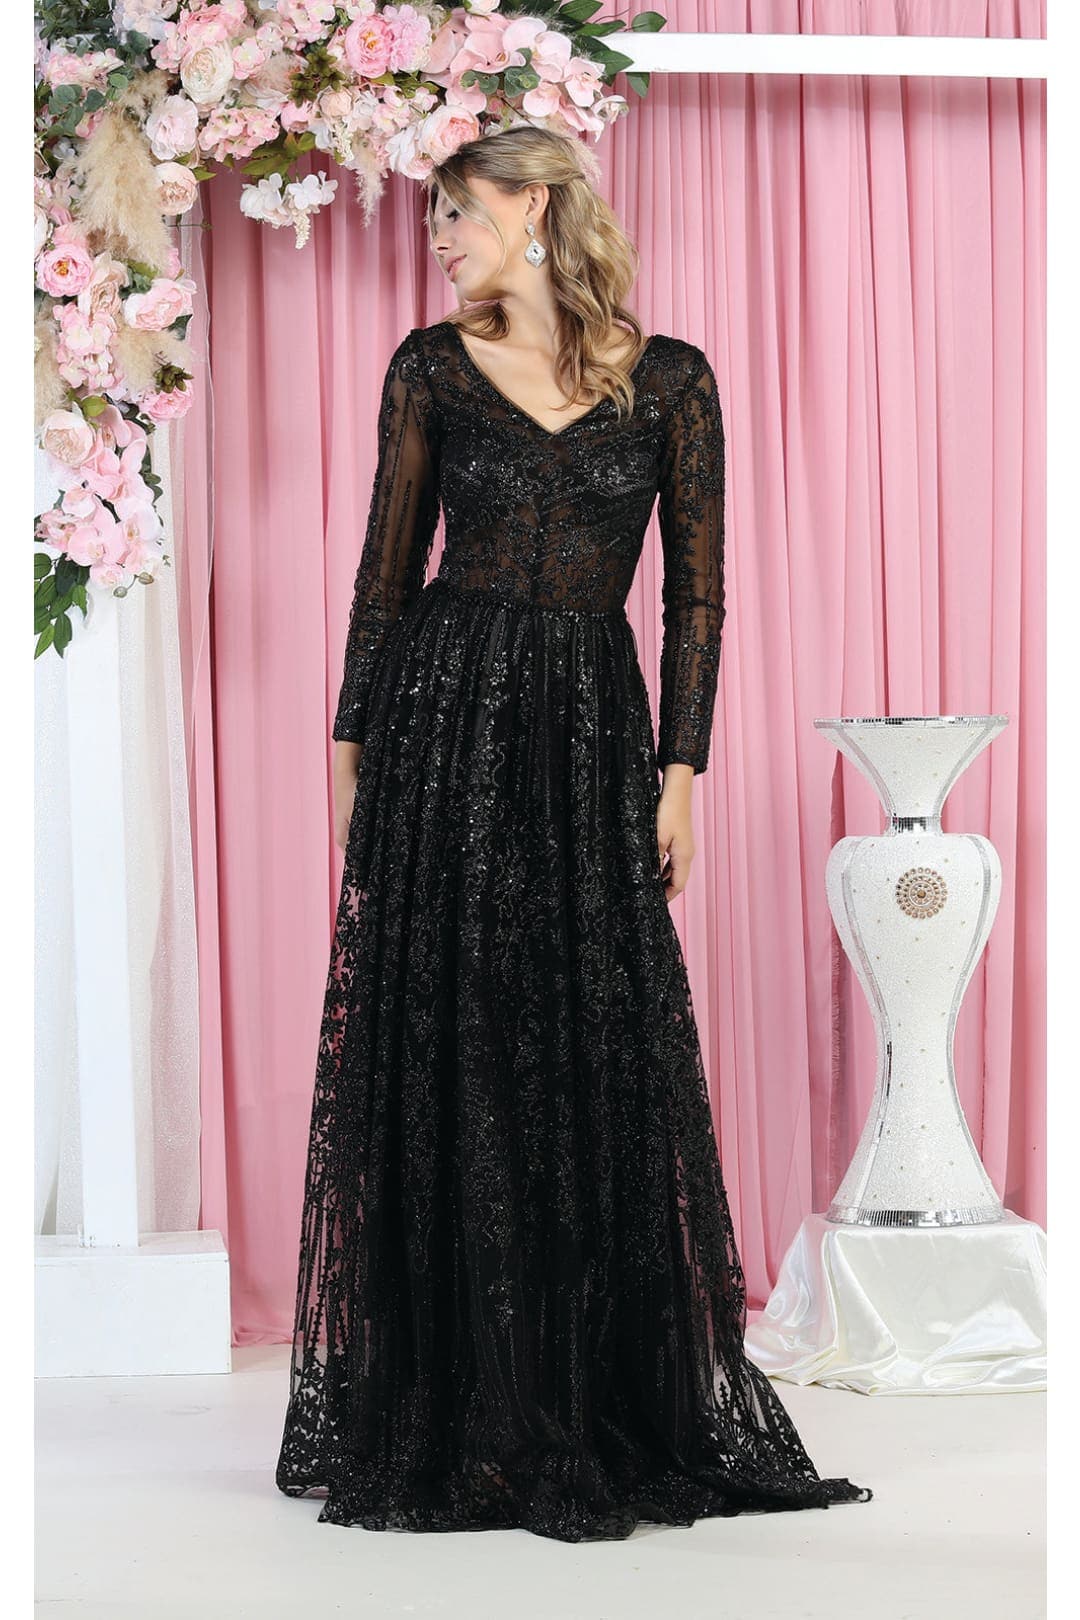 Royal Queen RQ7920 Glitter Floor Sweeping Prom Dress Long Sleeve - Black / 6